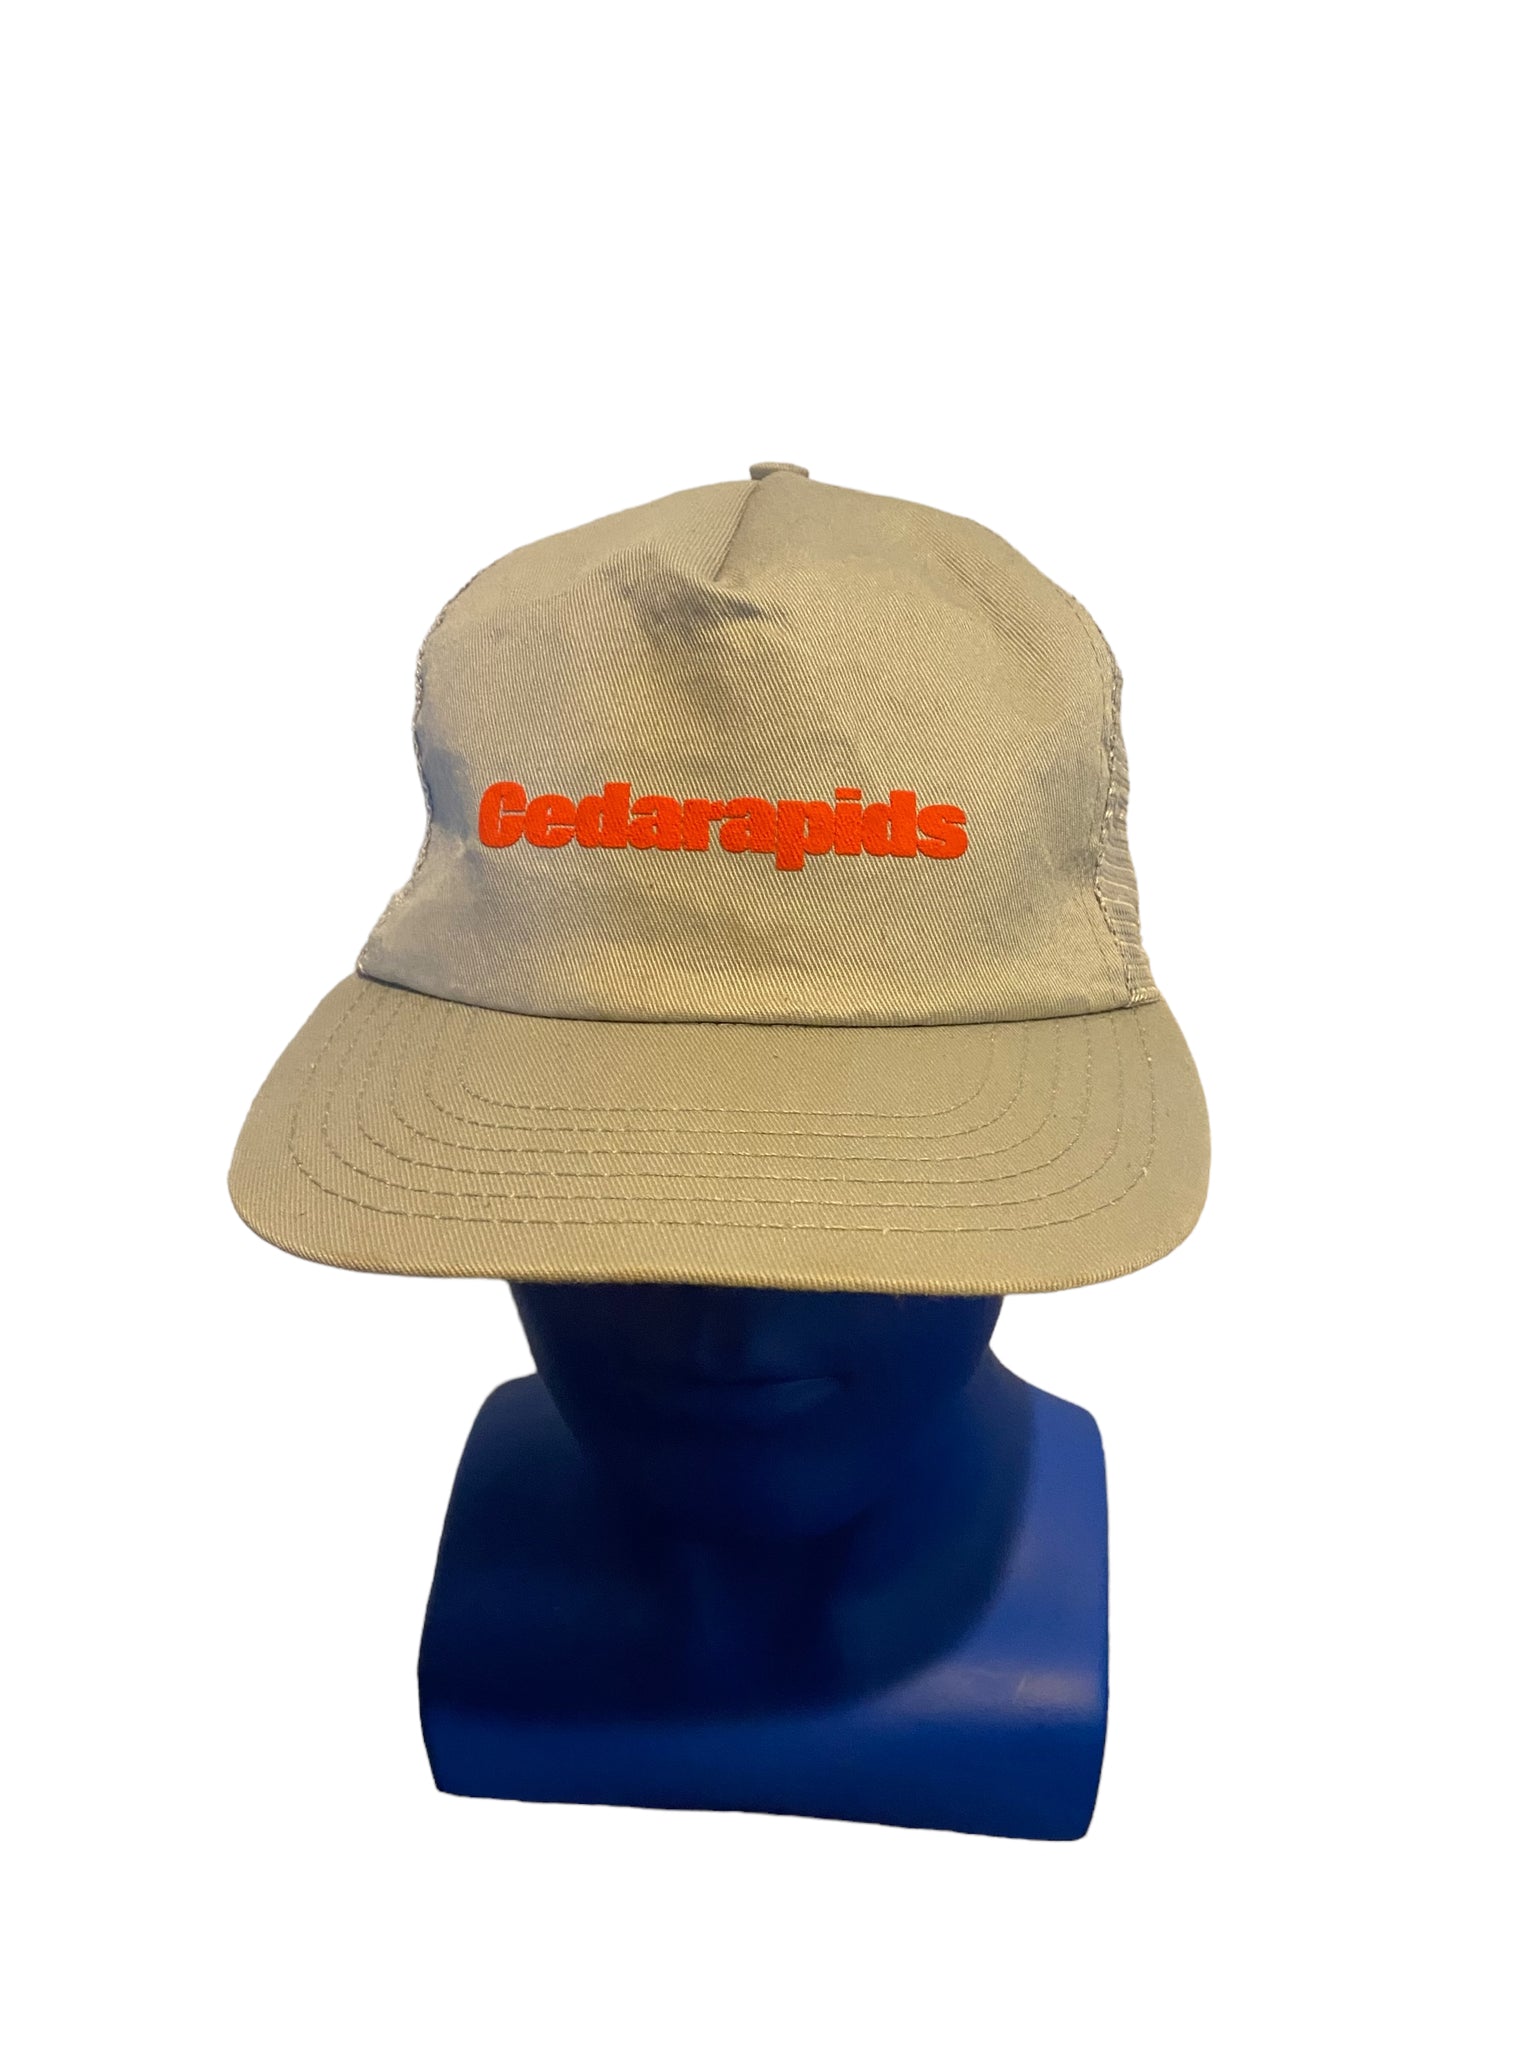 vintage cedarrapids puff print script trucker hat snapback gray